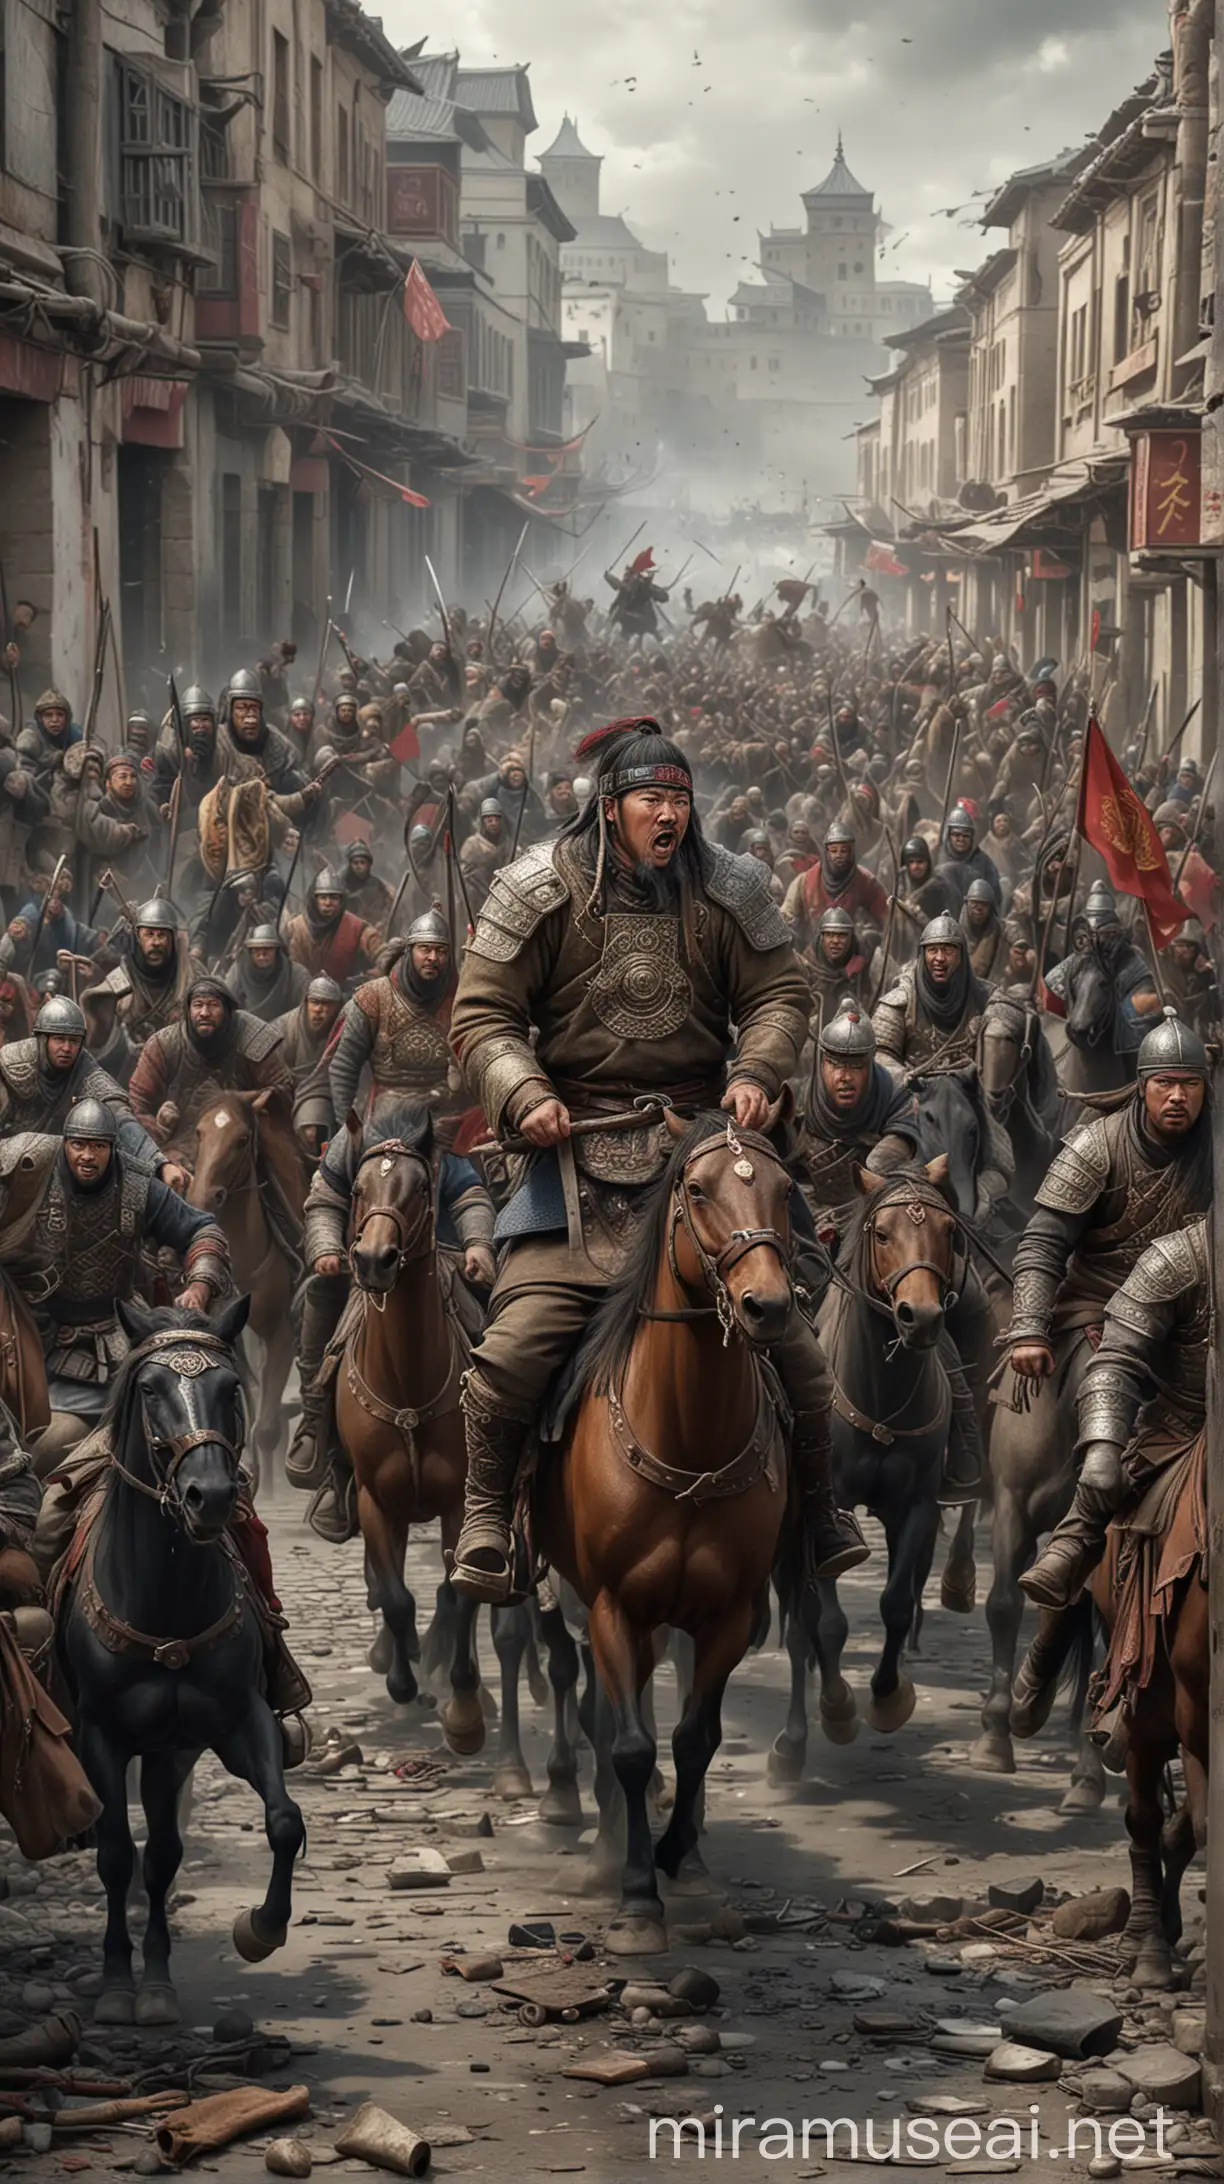 Mongol Warriors Storming City Hyper Realistic Historical Battle Scene